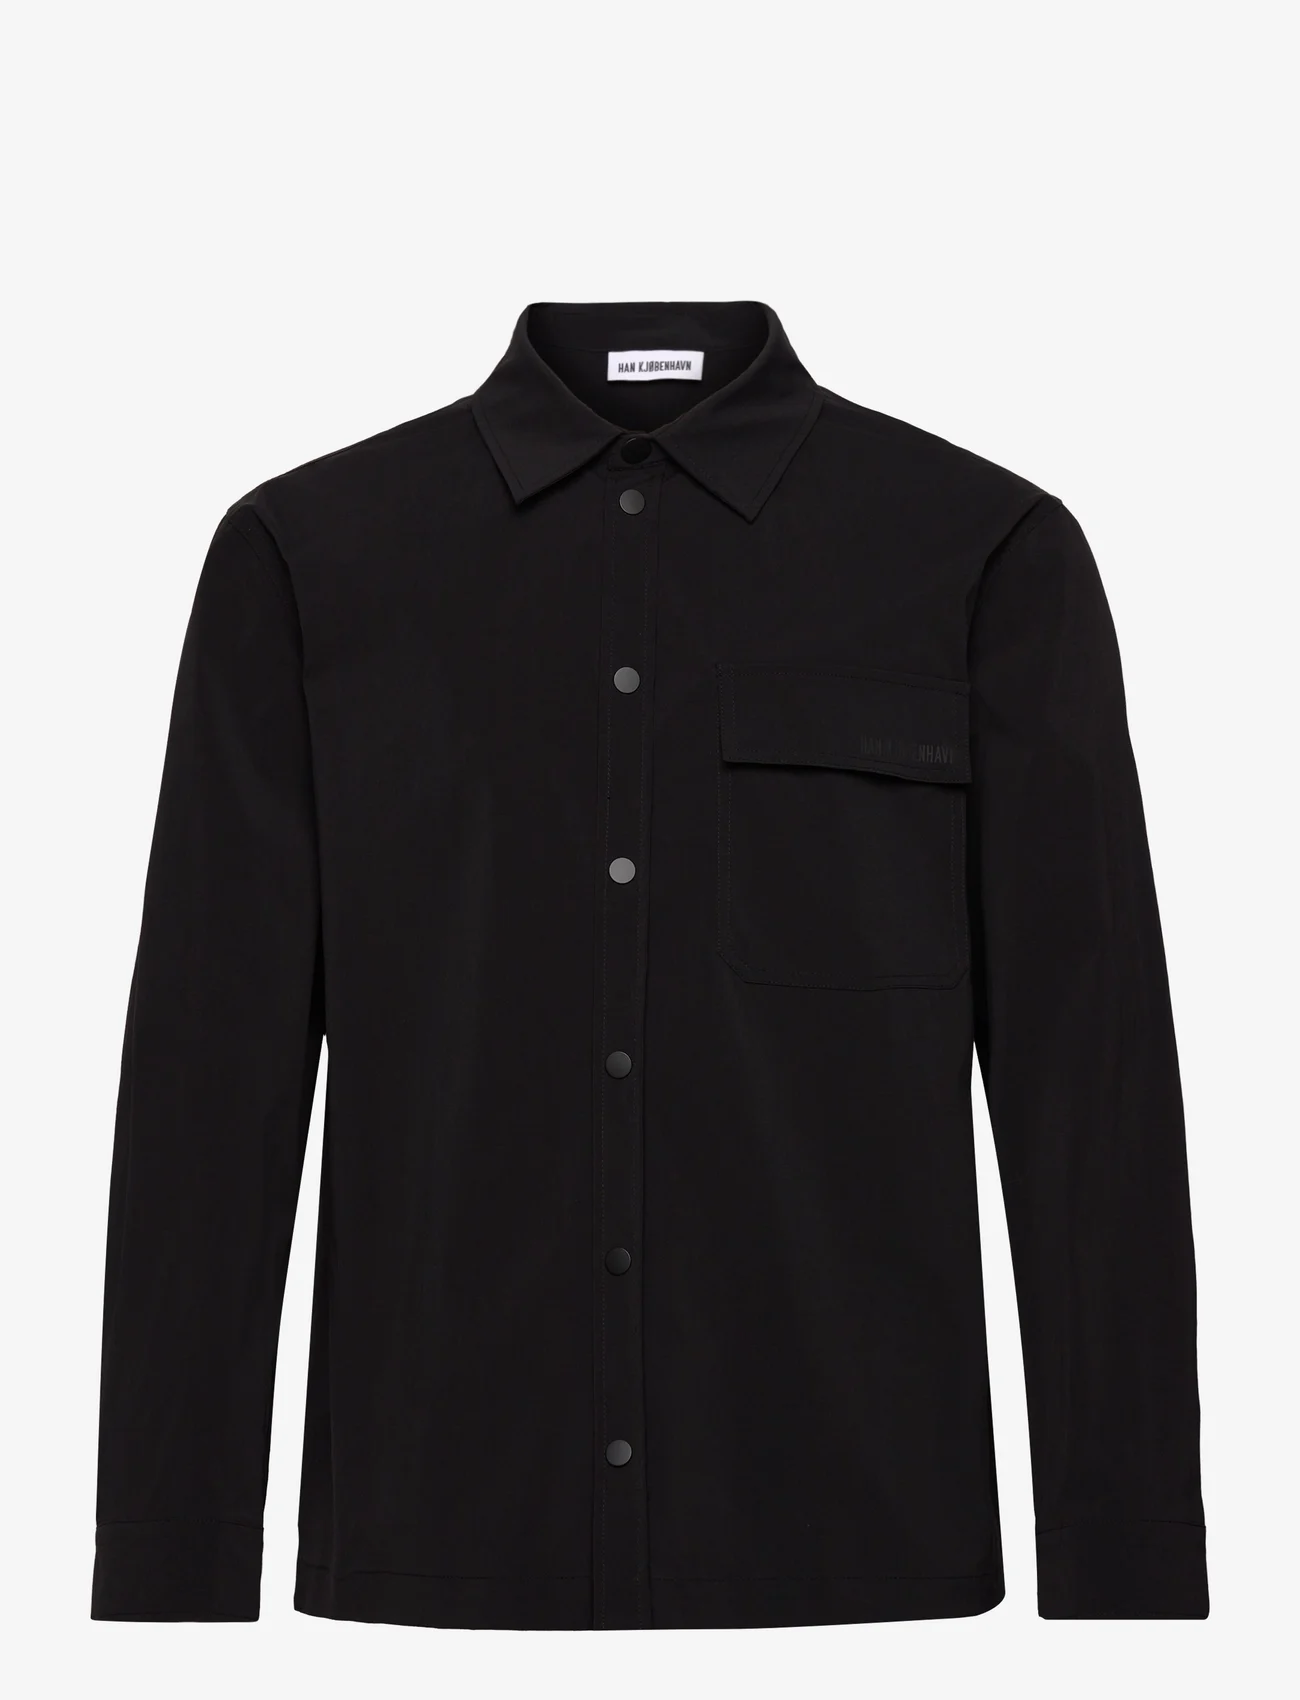 HAN Kjøbenhavn - Nylon Patch Pocket Shirt Long Sleeve - menn - black - 0